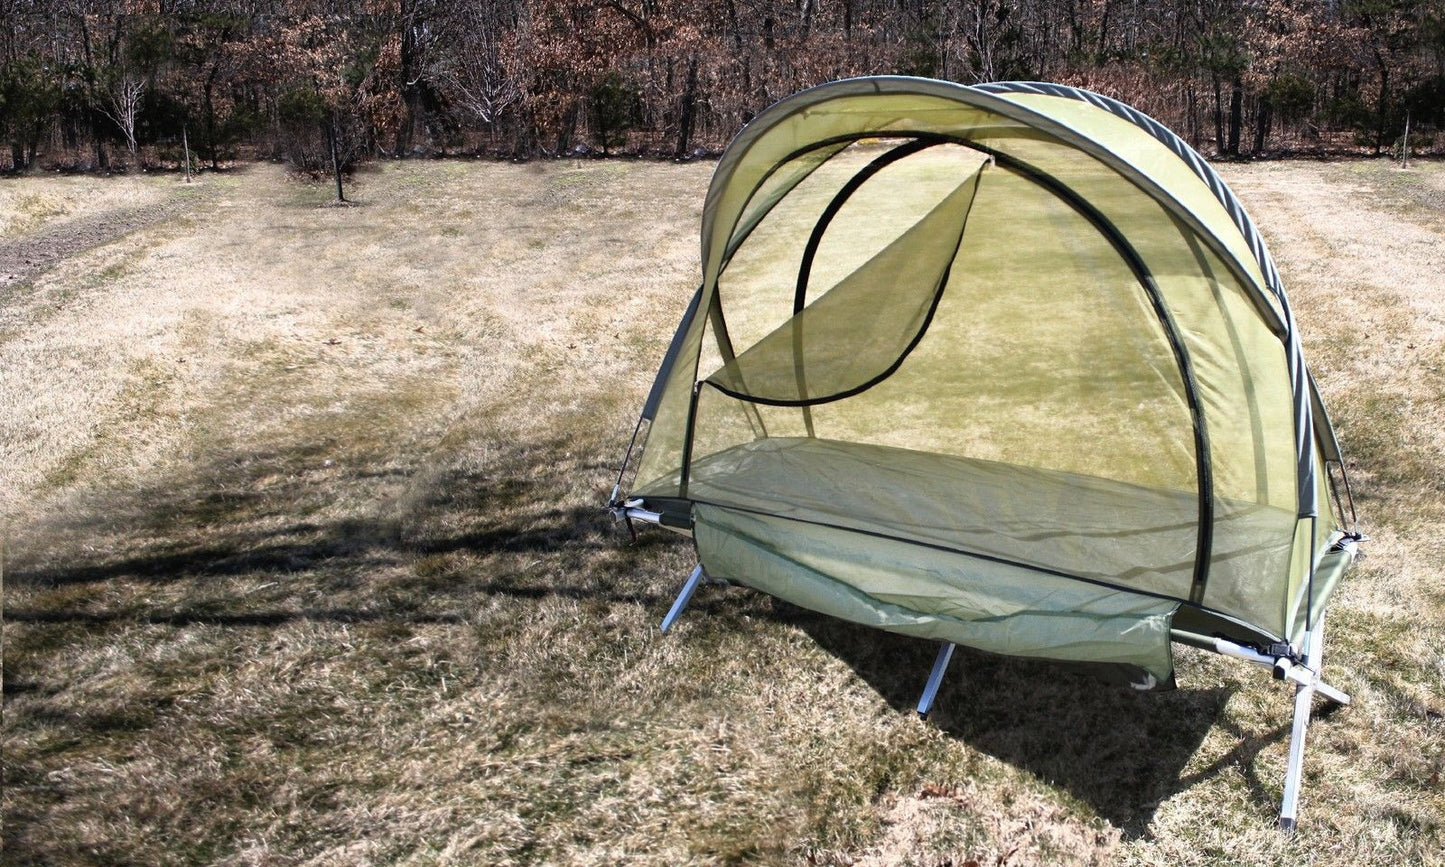 Mosquito Net Bar Cot - Free Standing Anti-Bug Sleeping Cot w/ Mesh Netting